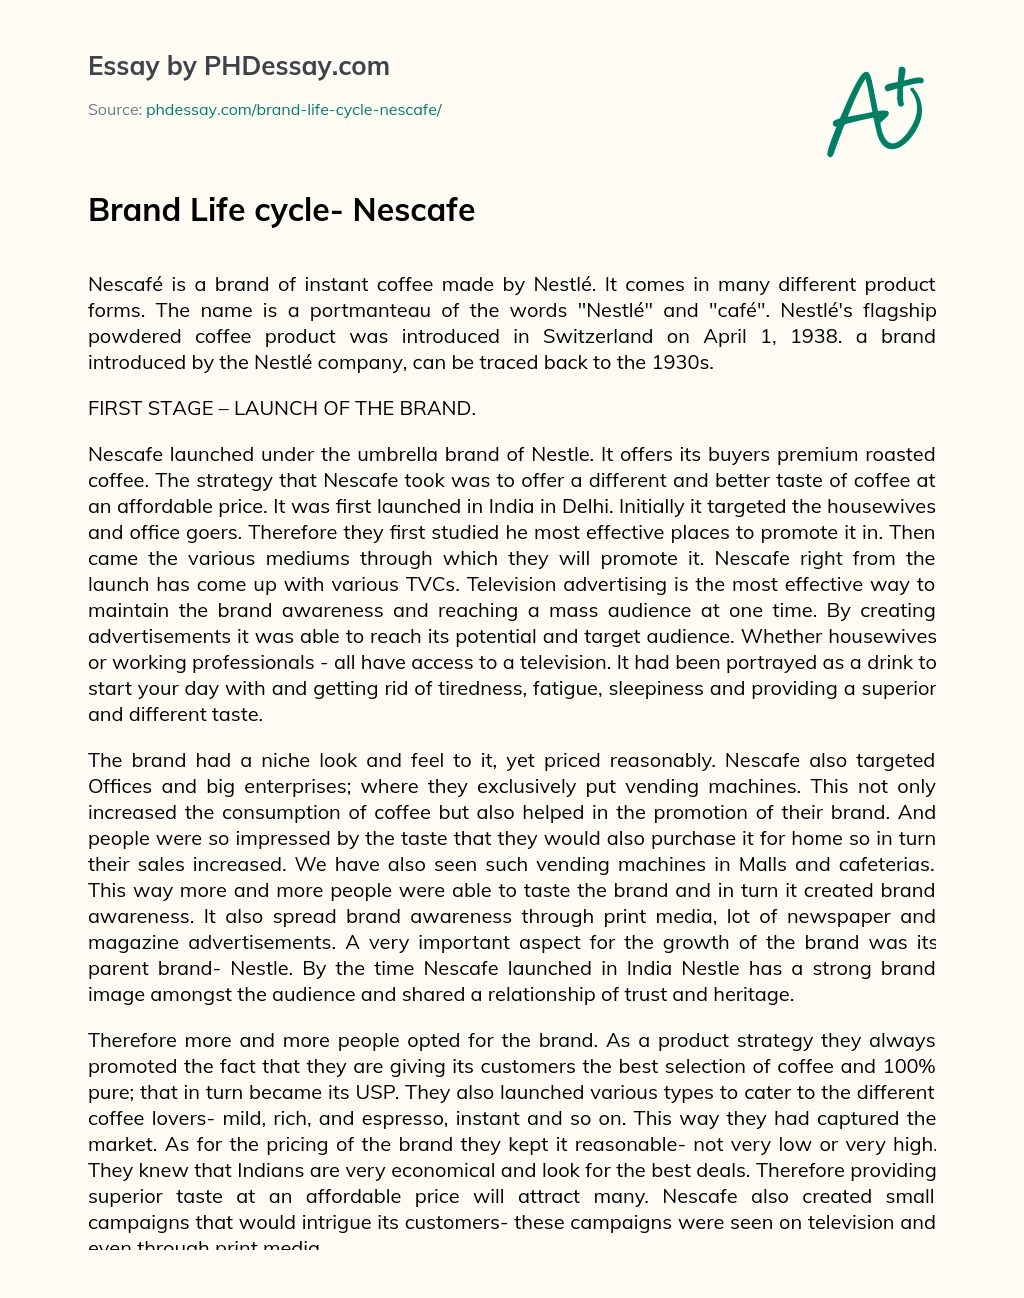 Brand Life cycle- Nescafe essay